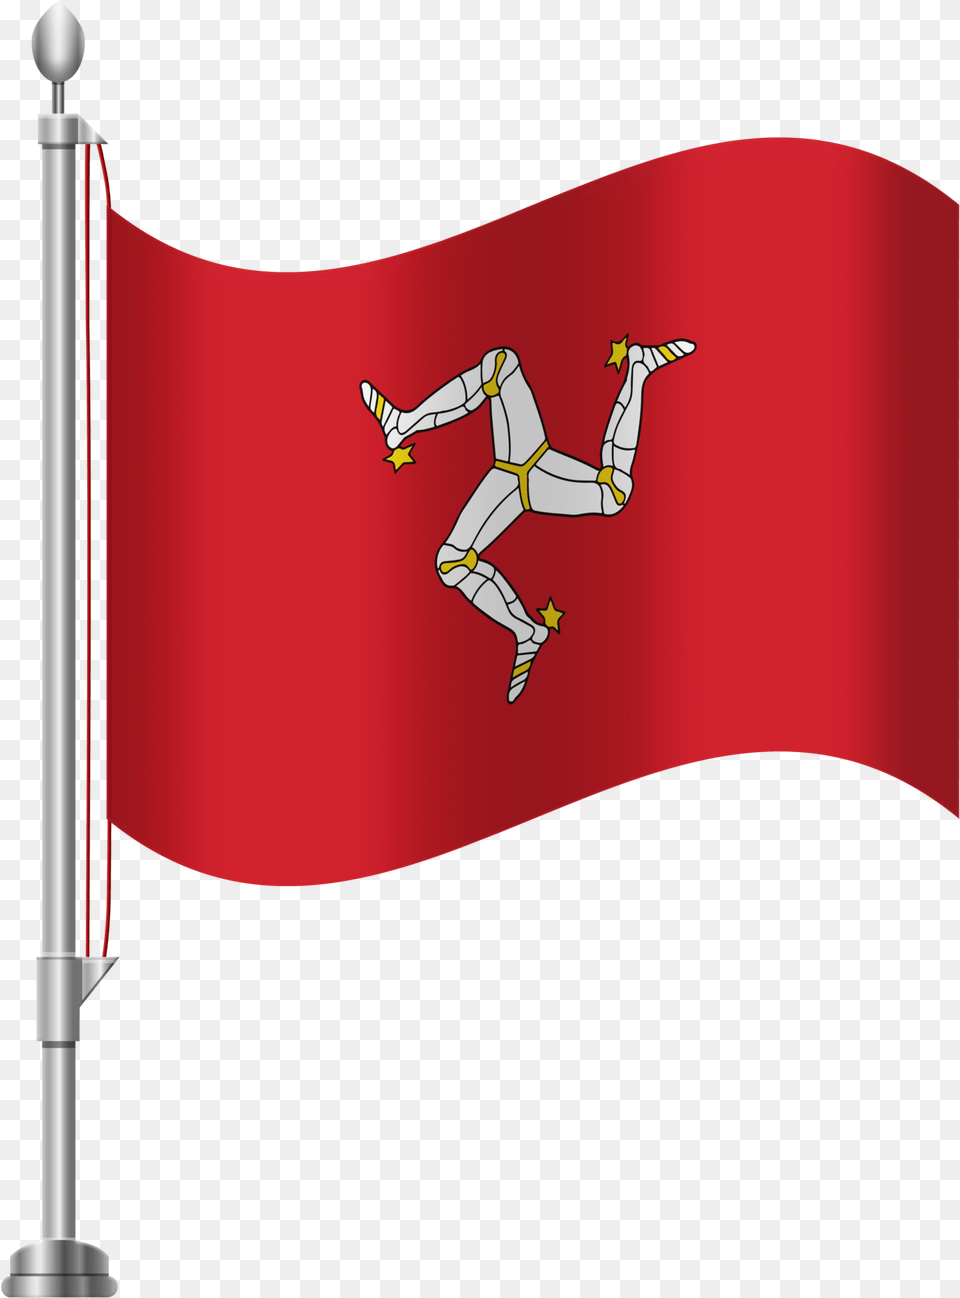 Isle Of Man Flag Clip Art Honduras Flag On Pole, Person Free Transparent Png